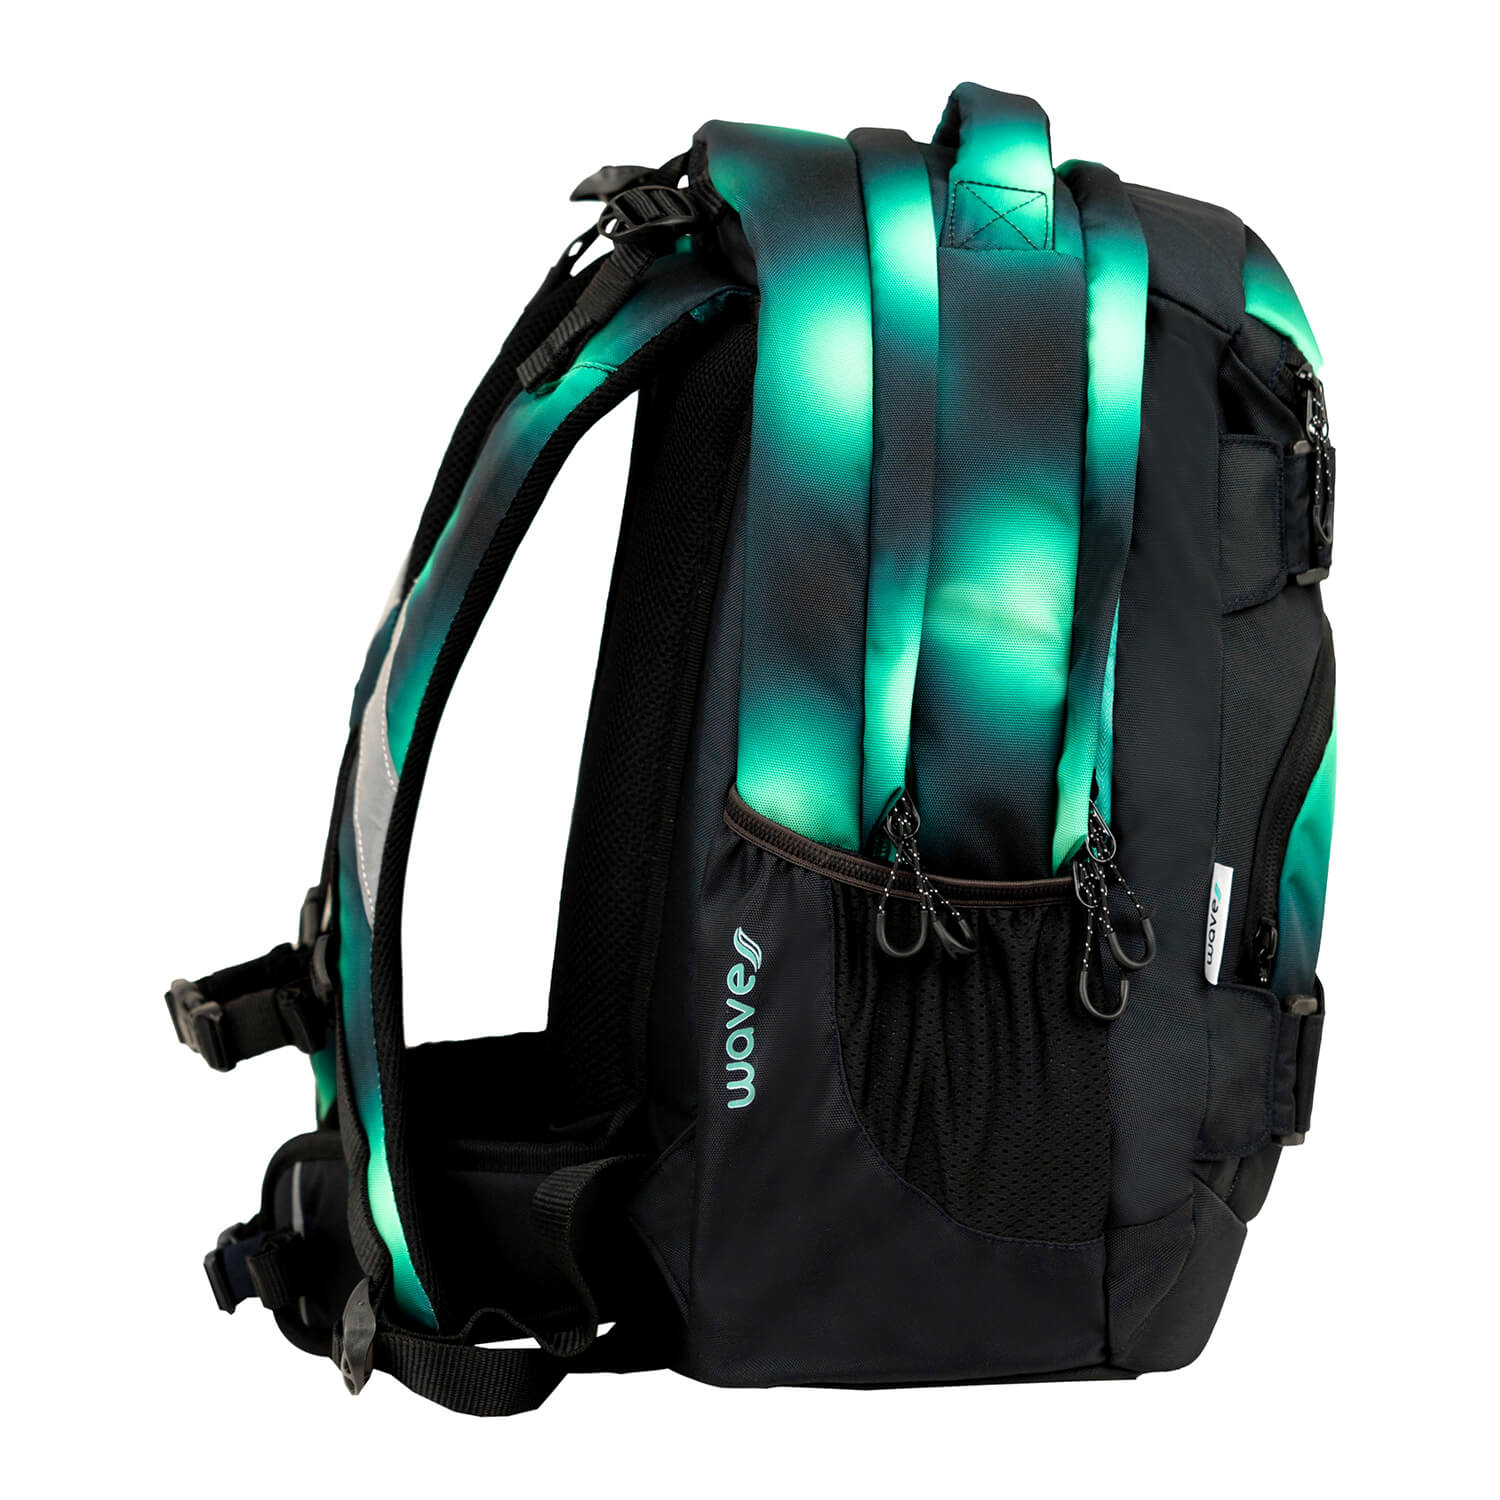 Wave Infinity Move Gradient Aurora school backpack